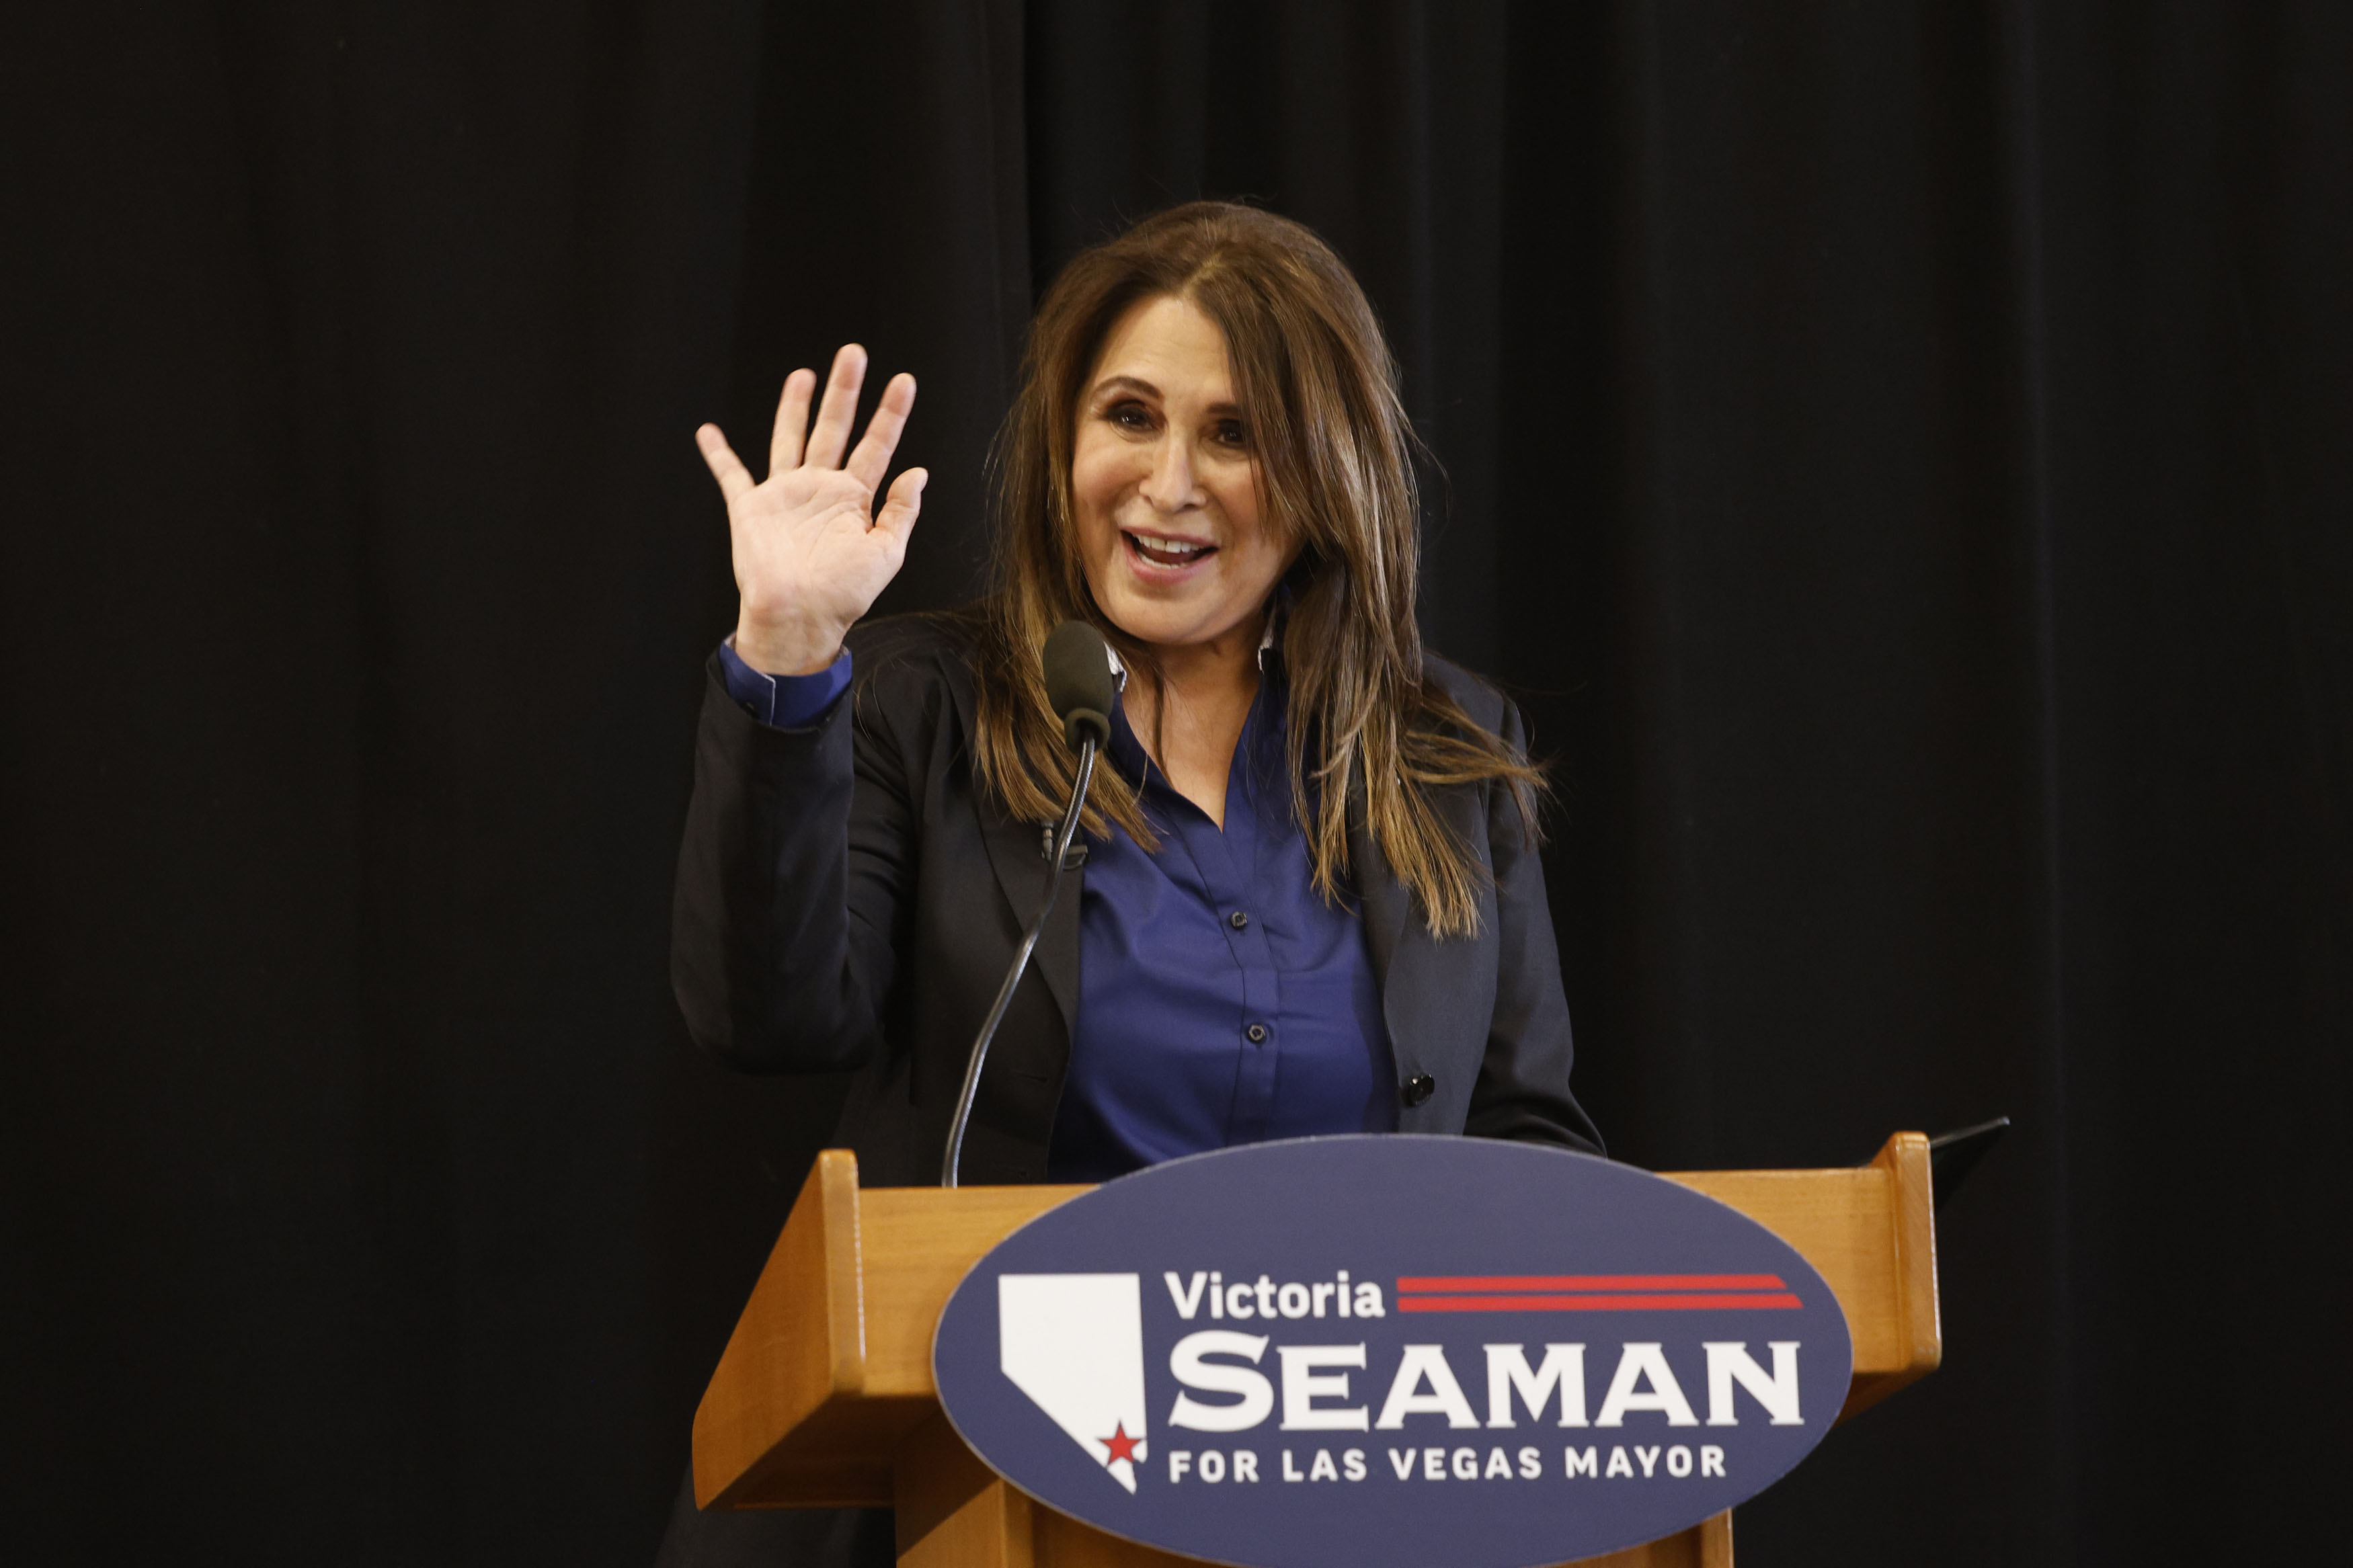 Victoria Seaman mengumumkan tawaran untuk walikota Las Vegas, mengatakan ‘kemampuan yang bersemangat’